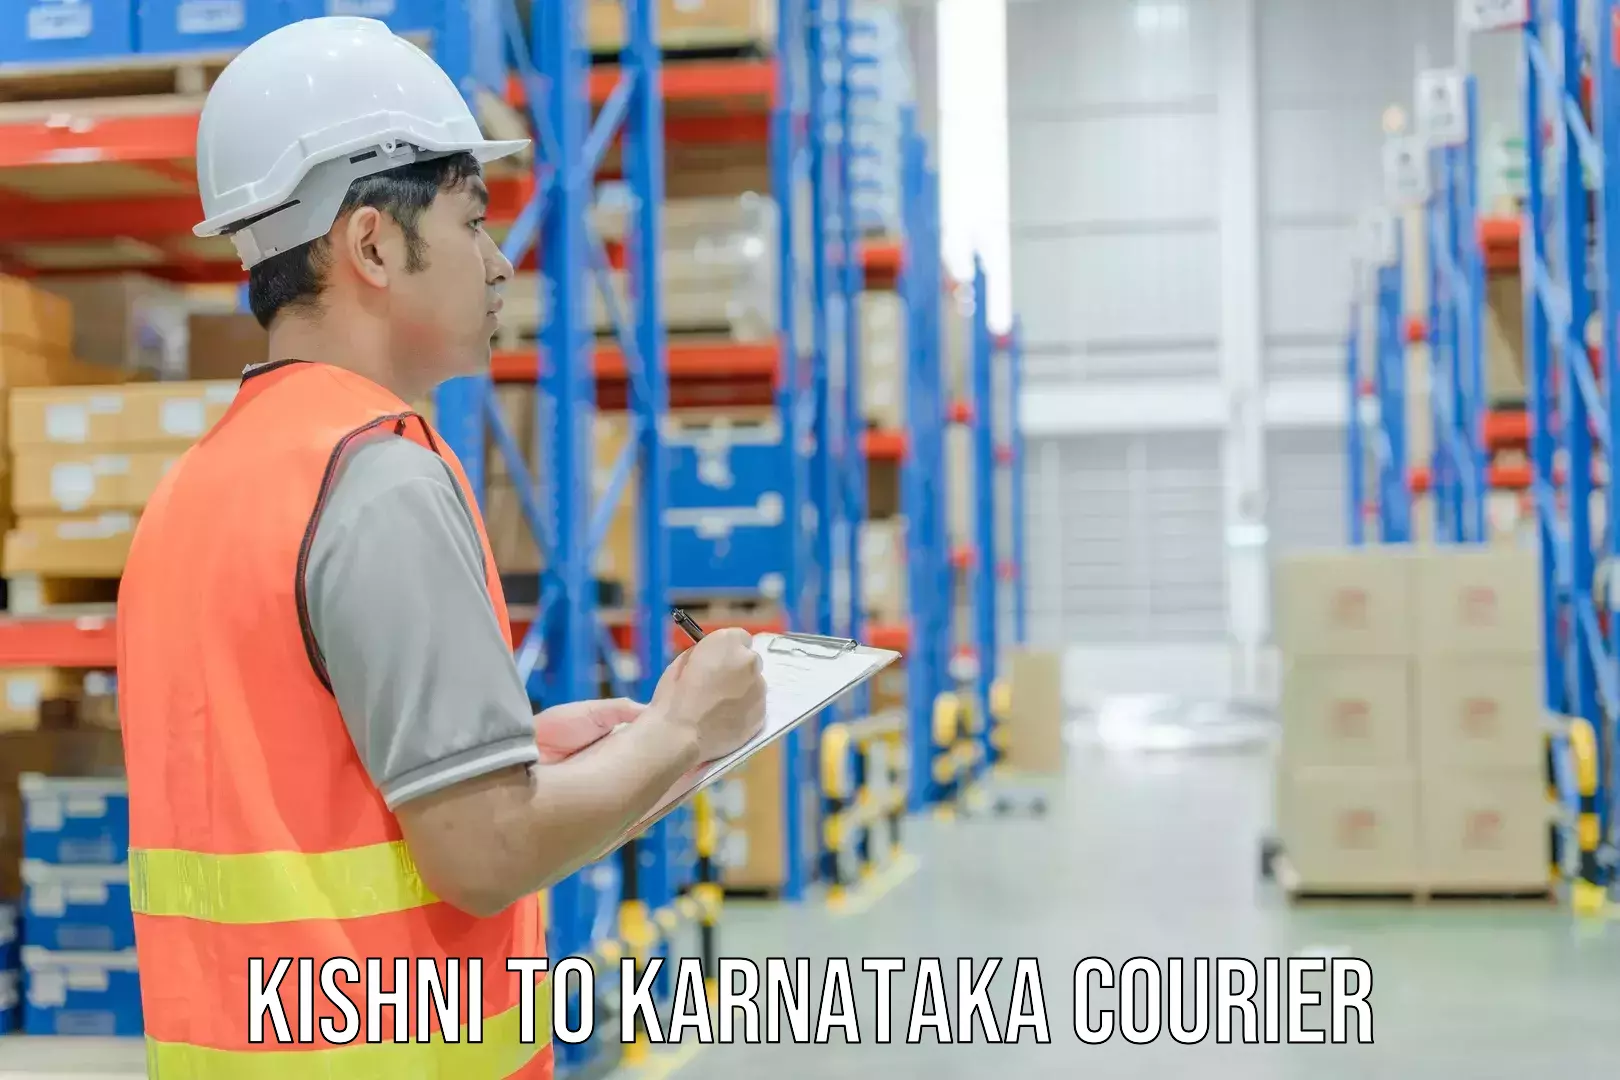 Full-service courier options Kishni to Karnataka